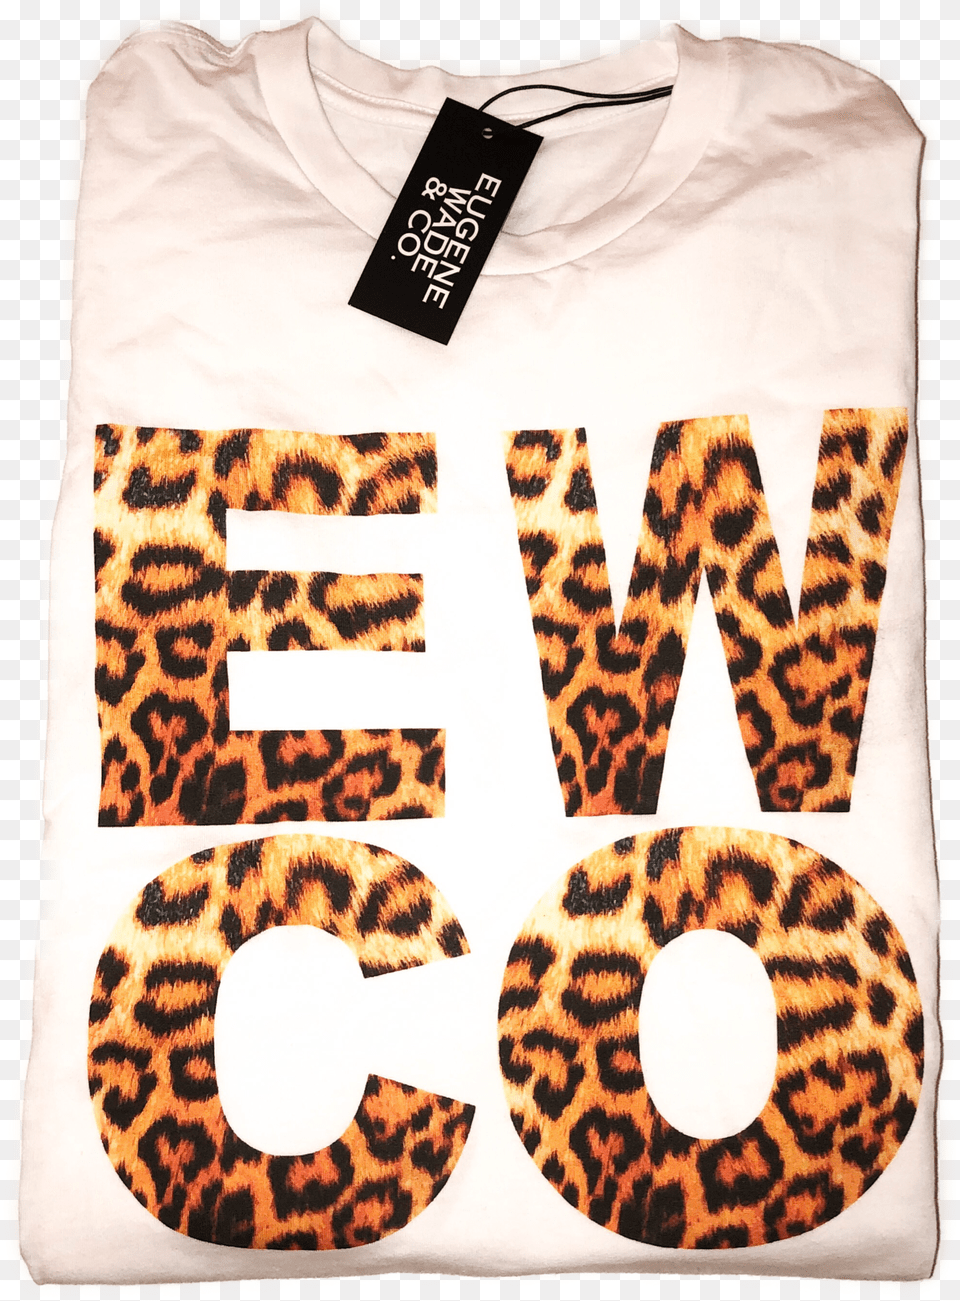 Cheetah Print Ewco, Clothing, T-shirt, Shirt, Home Decor Free Transparent Png